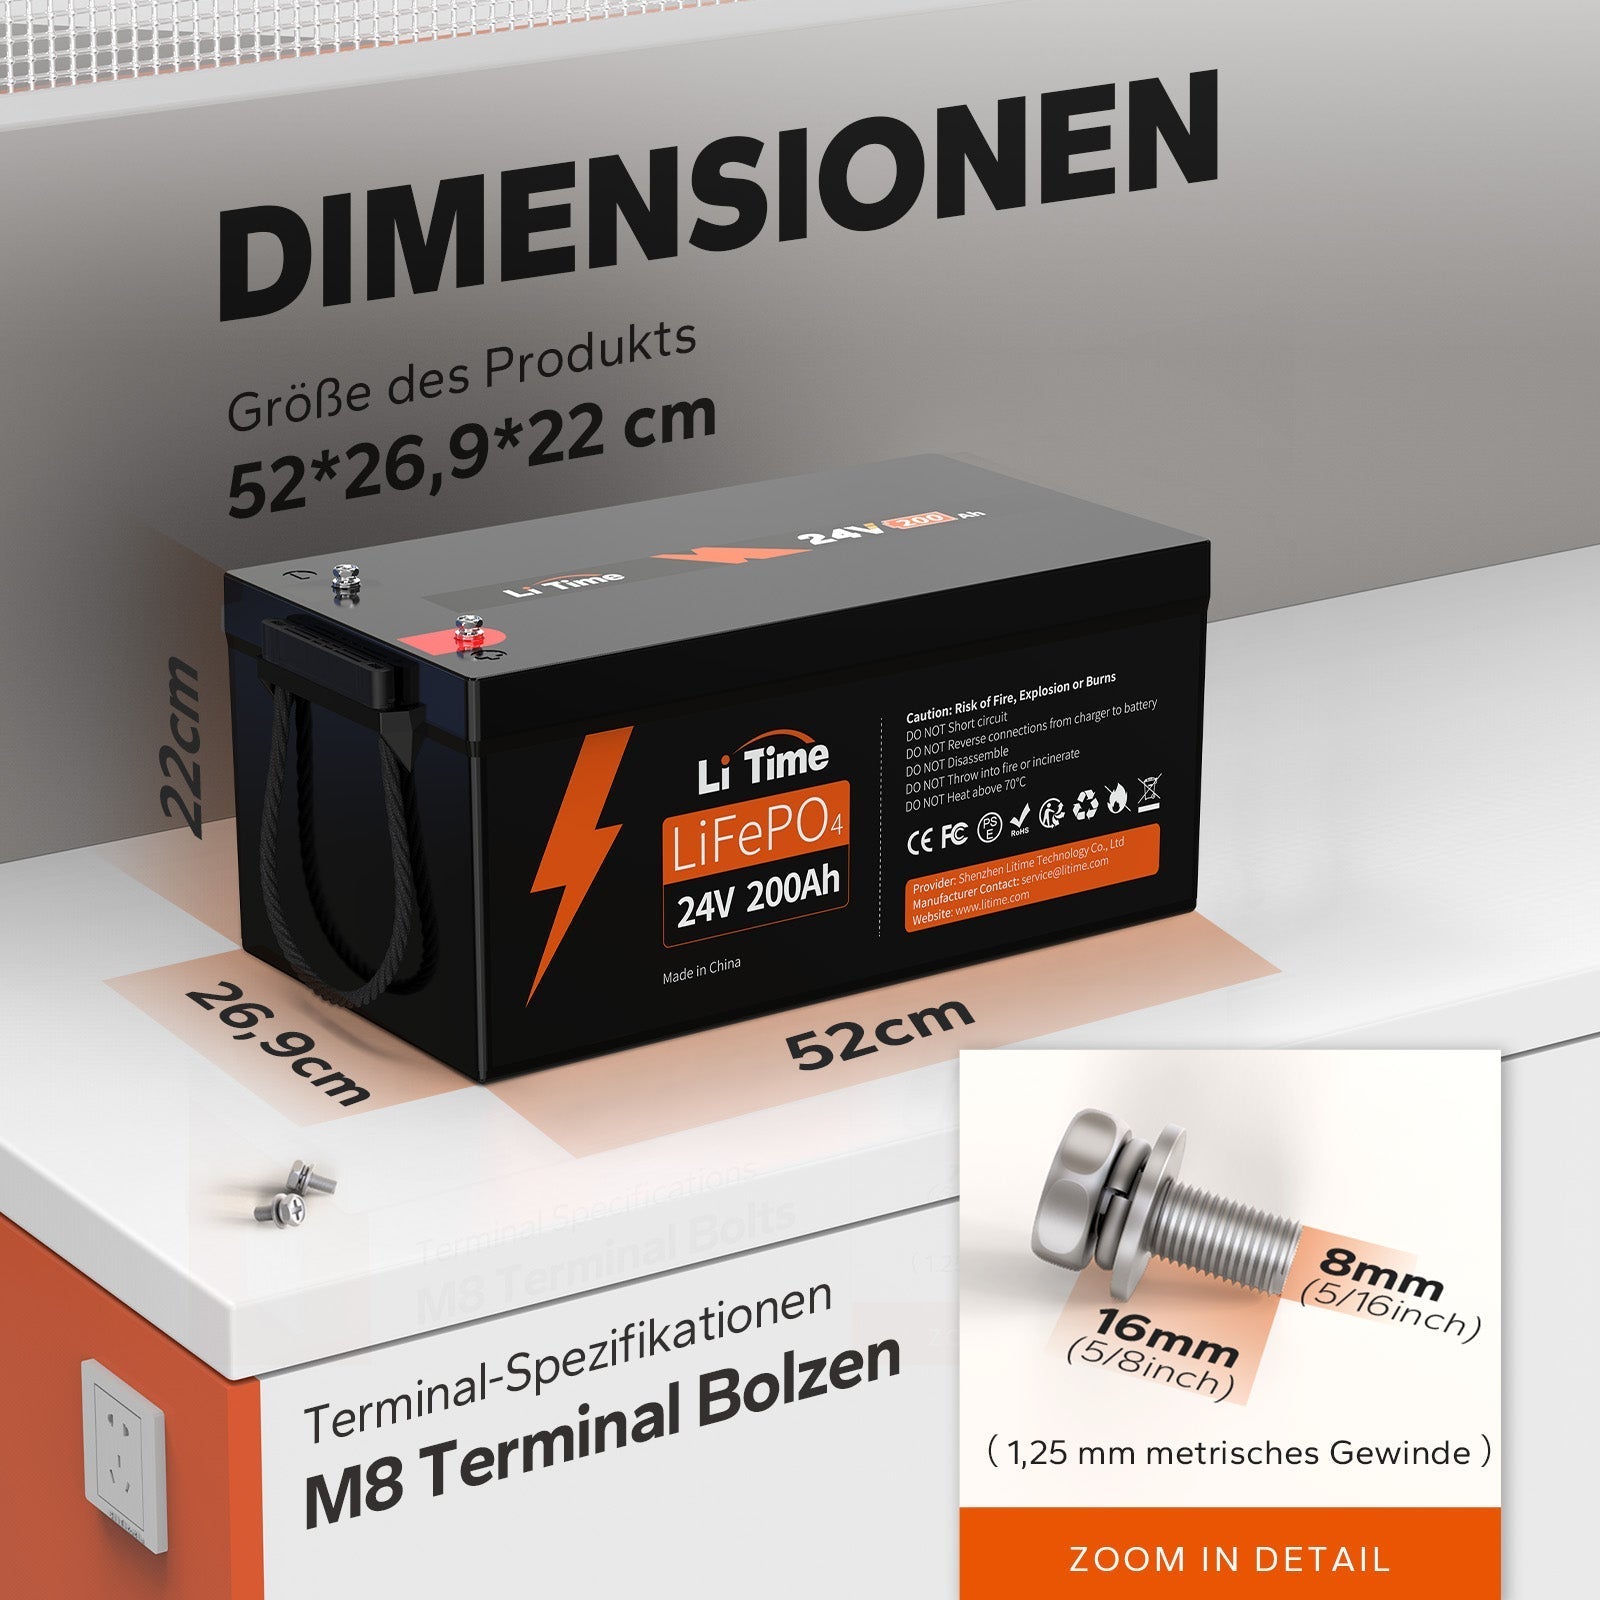 2 batterie LiTime 24V 200Ah🔥E un caricabatterie da 29,2V 20A gratuito per te🔥